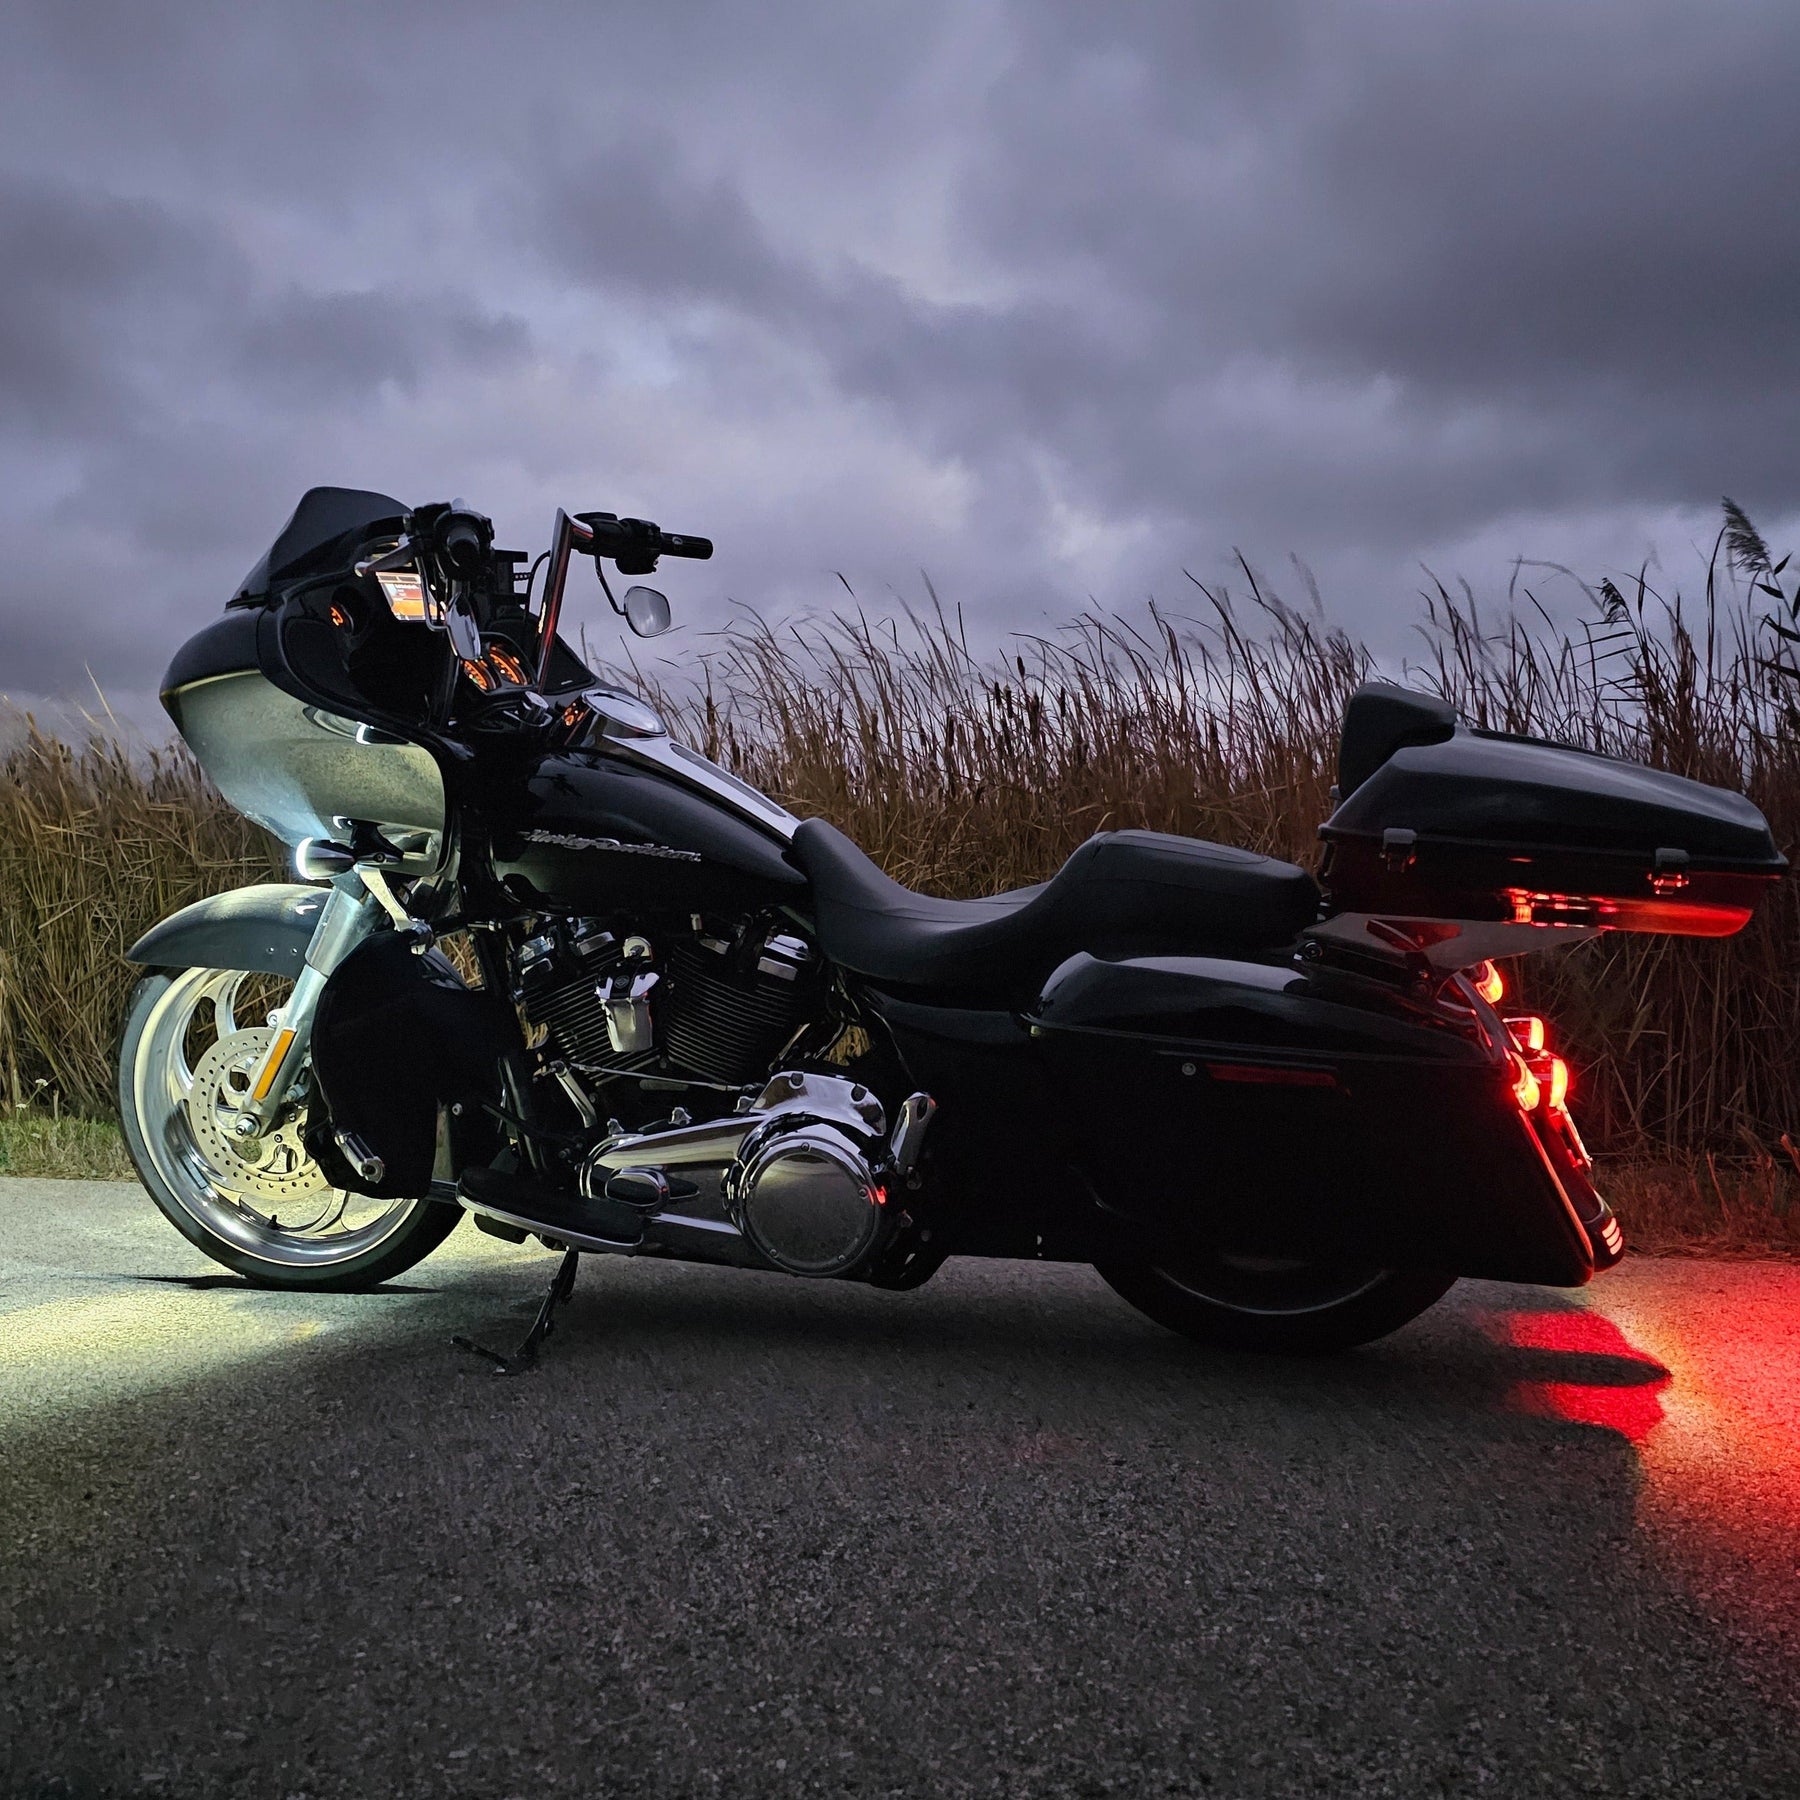 Eagle Lights LED Projection Headlight for Harley Davidson 2015 or Newer Road Glide